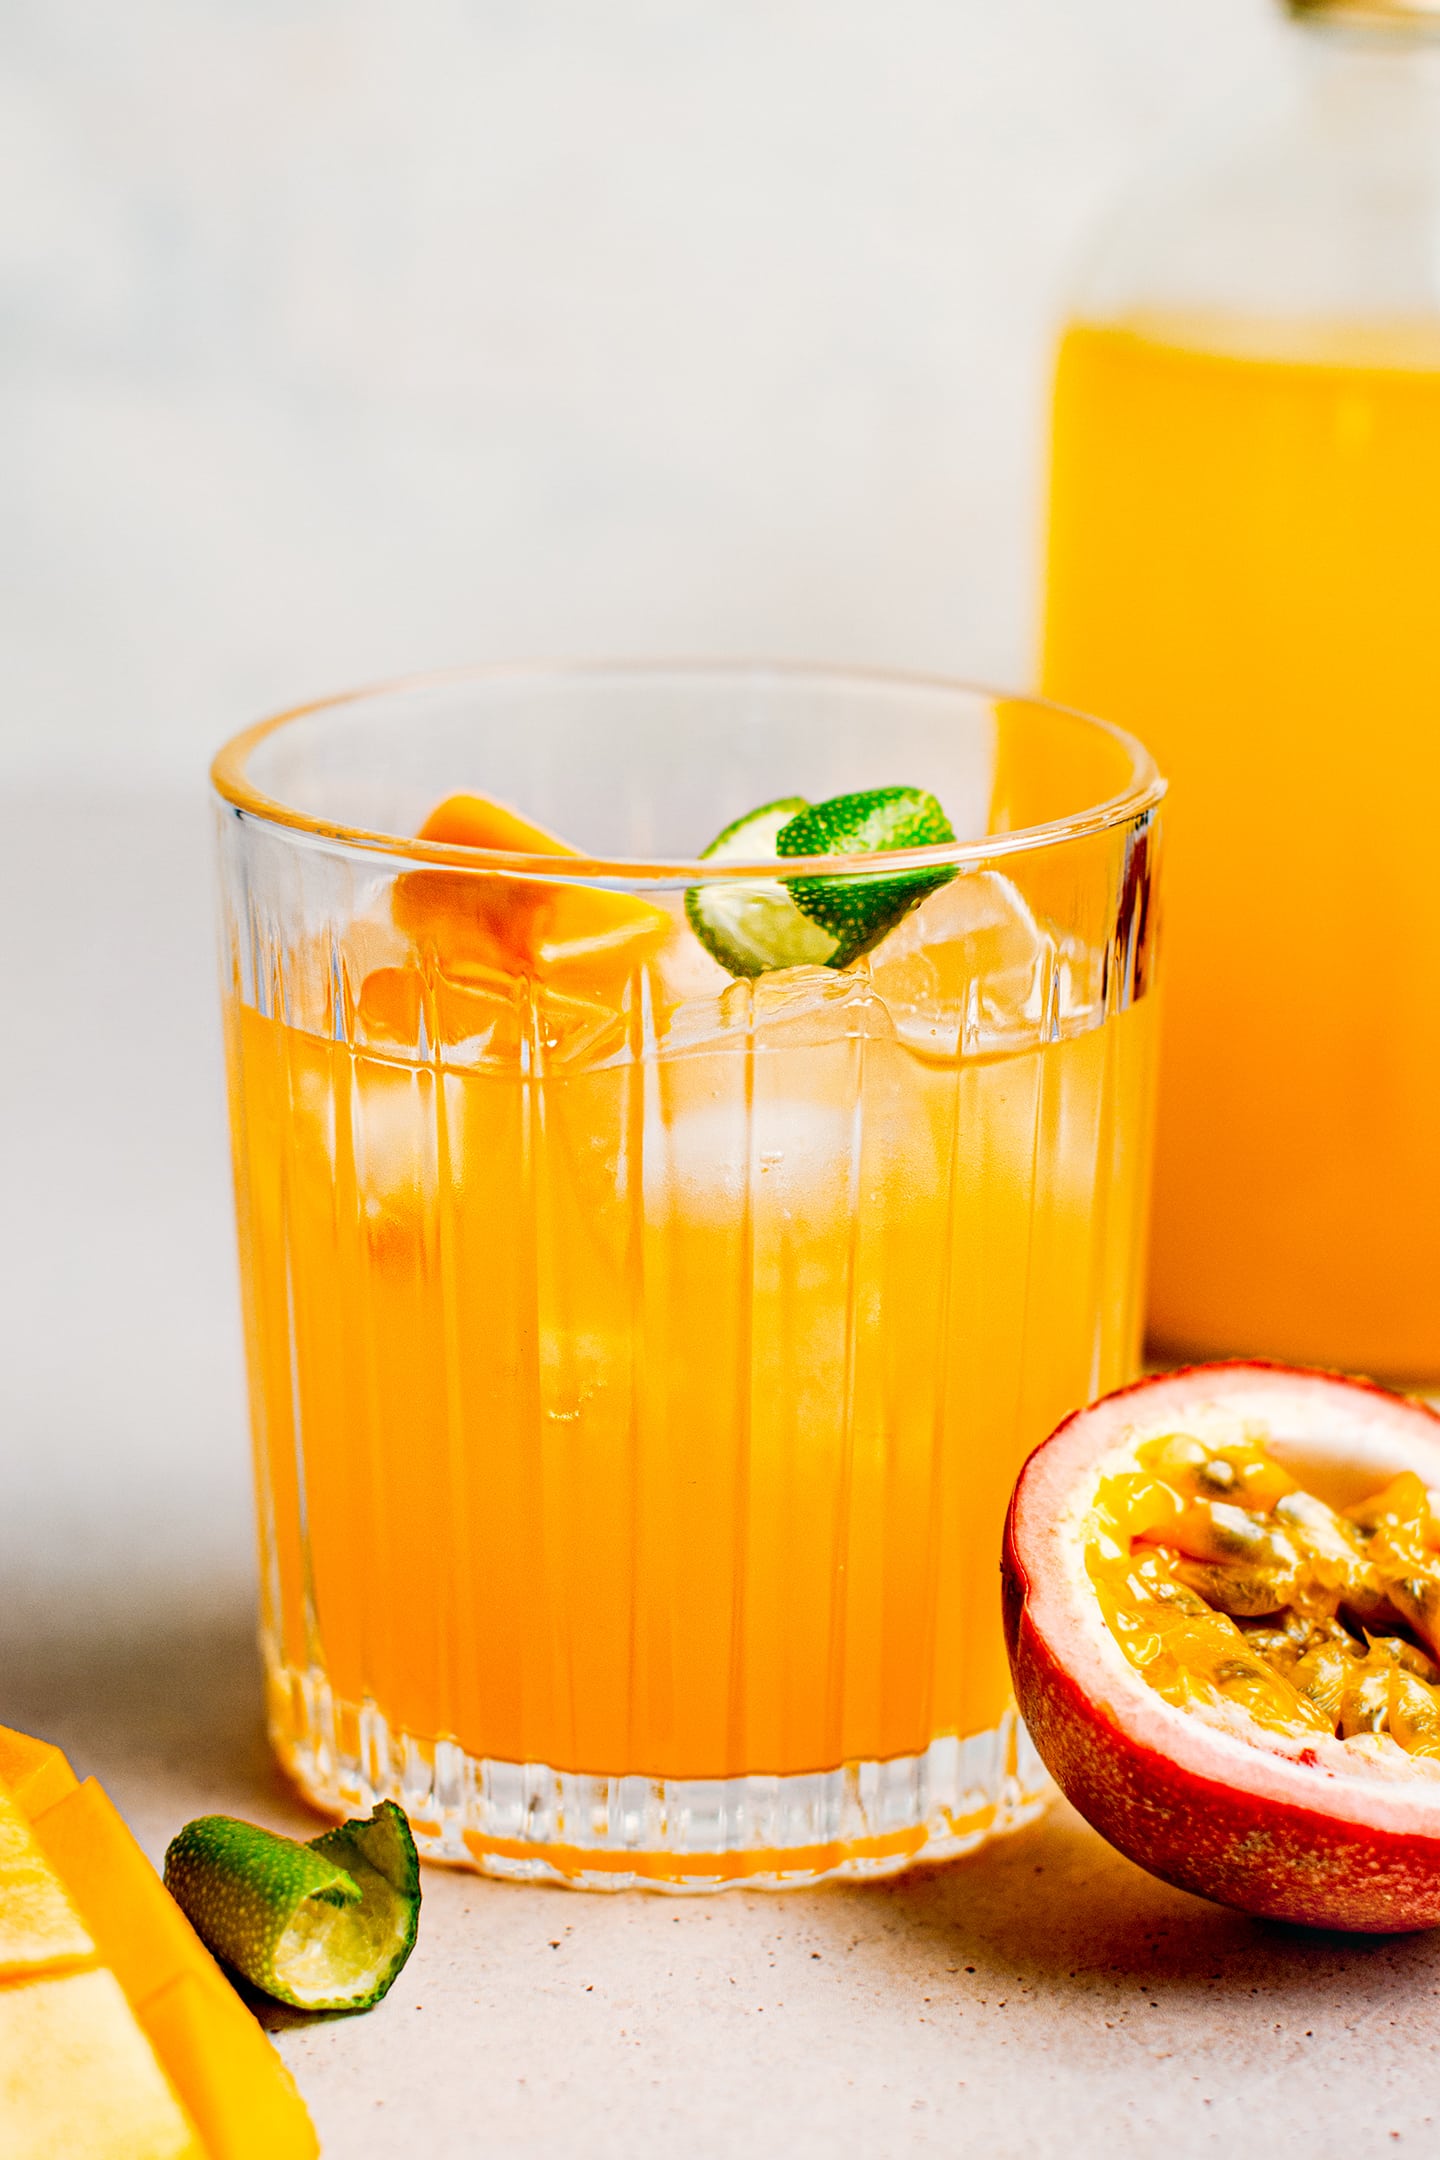 Mango & Passion Fruit Liquor